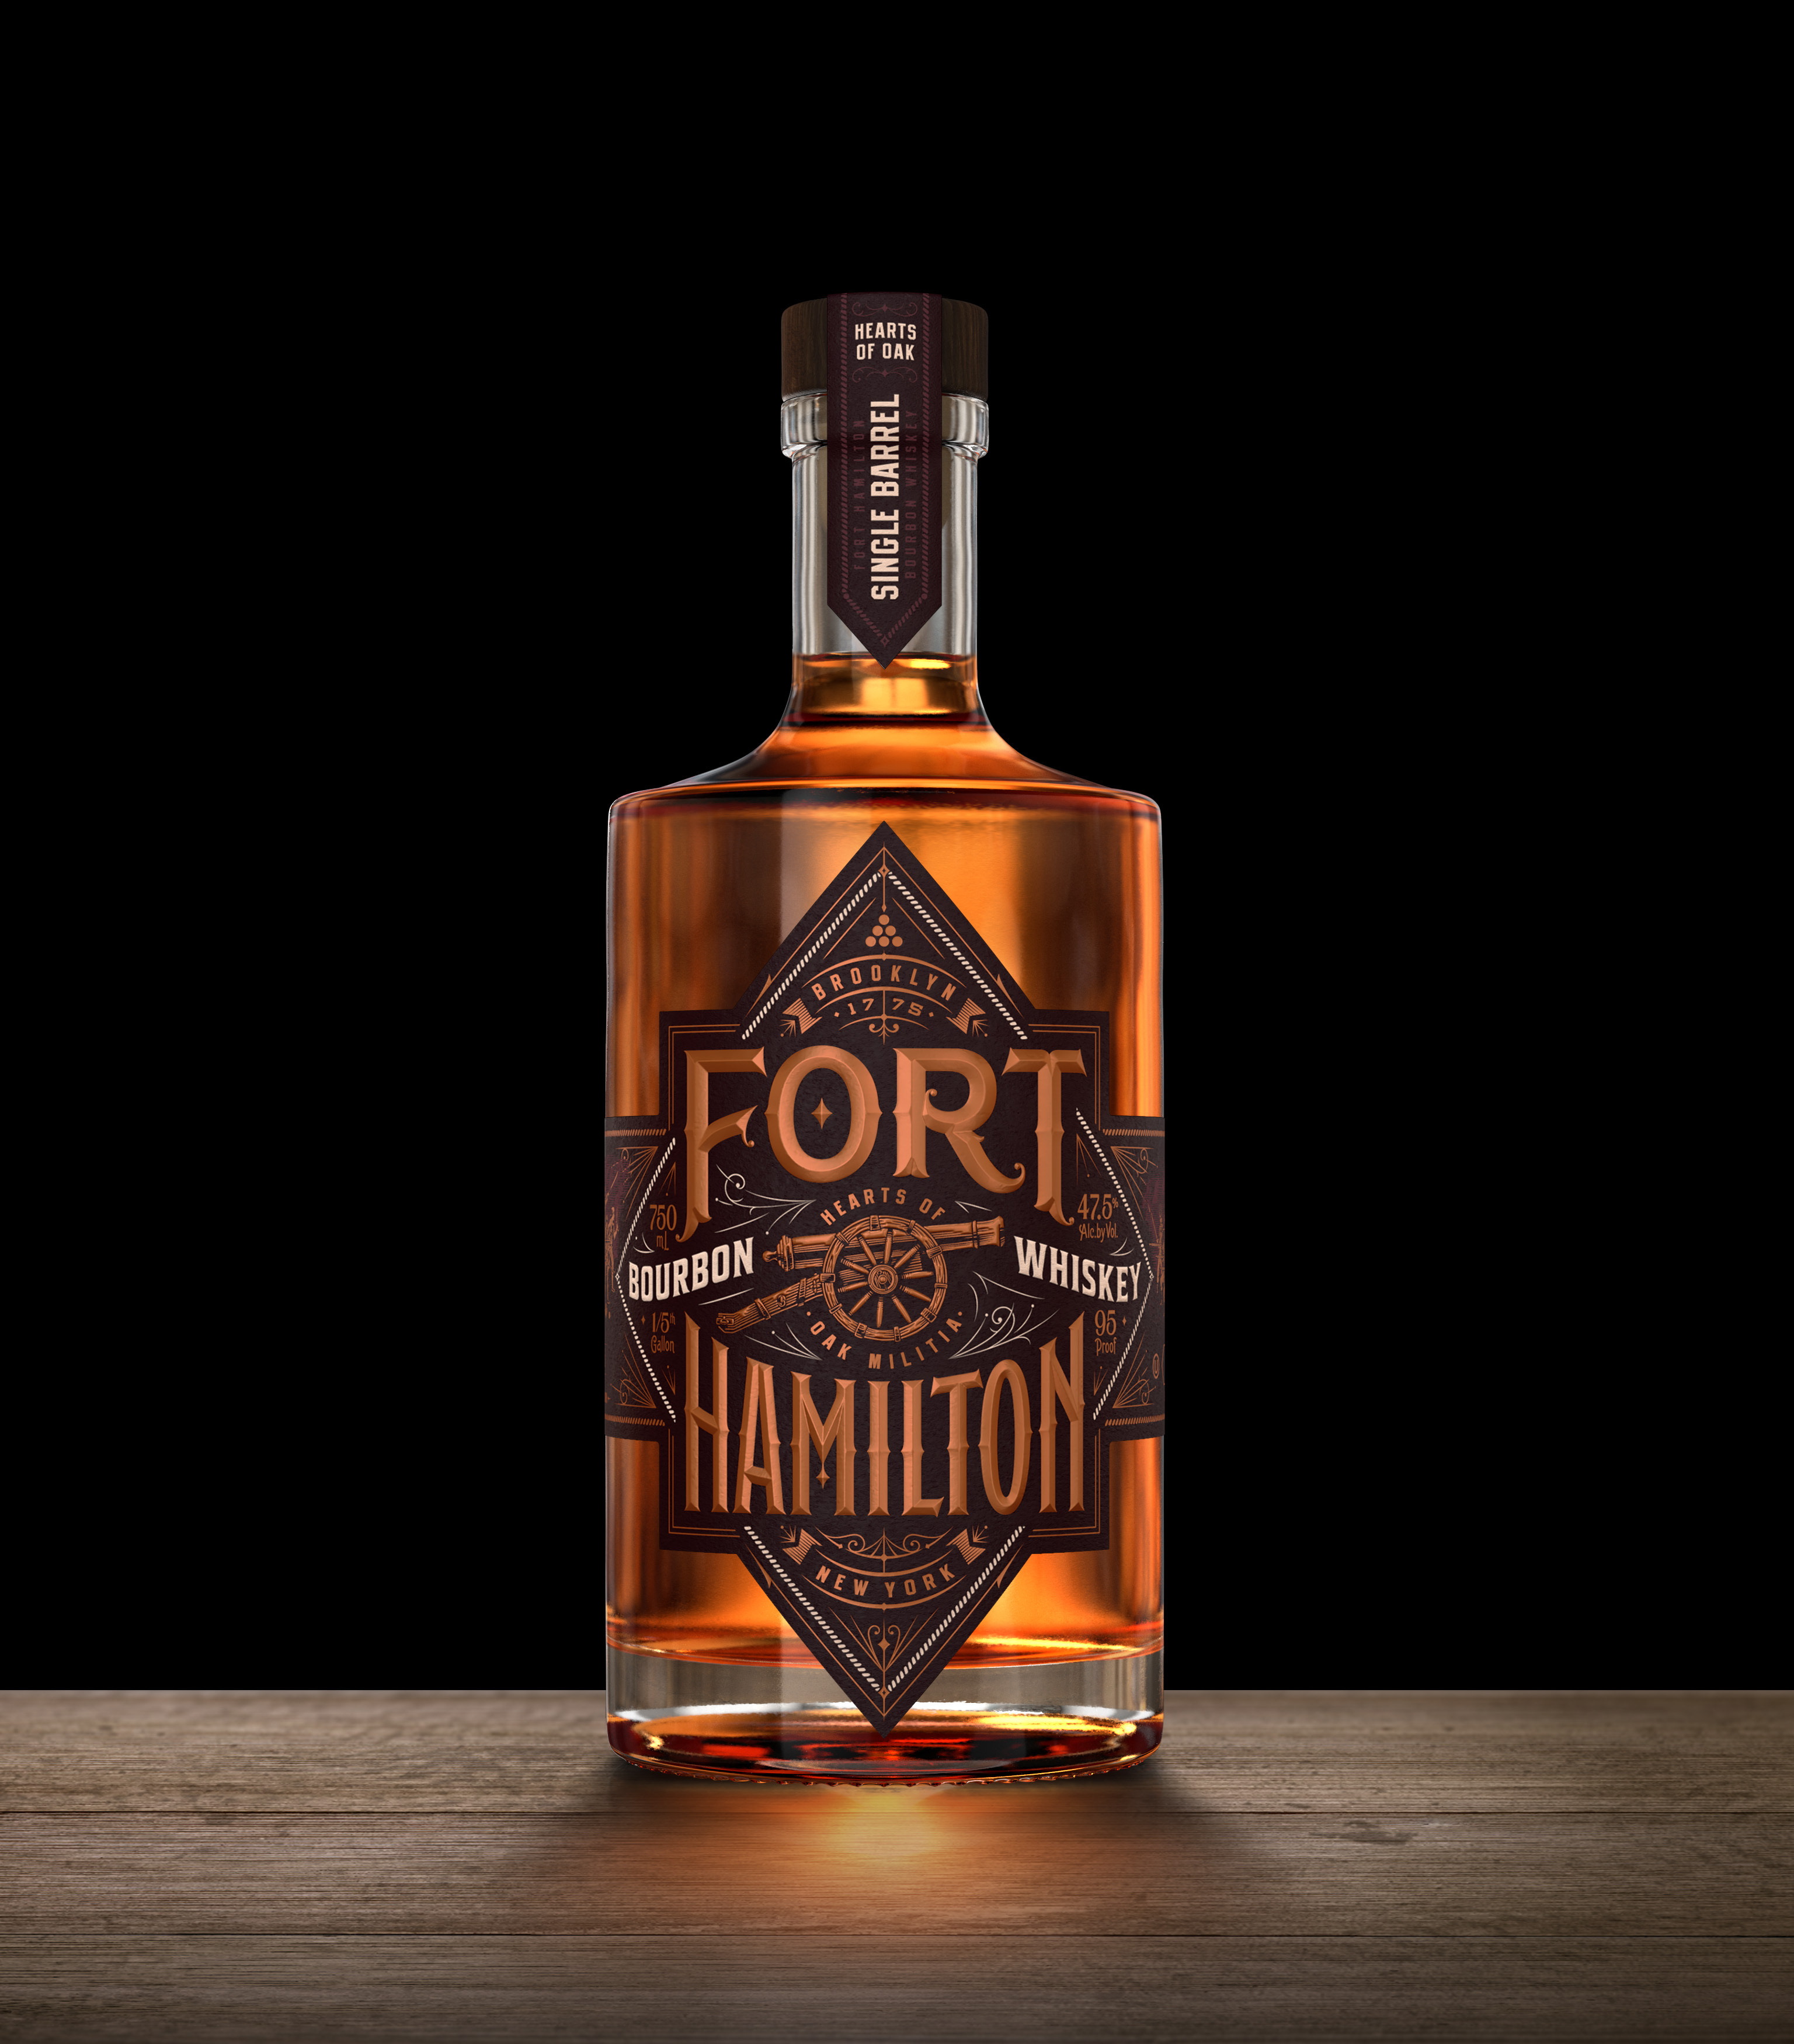 Fort Hamilton Announces 100% New York Single Barrel Bourbon